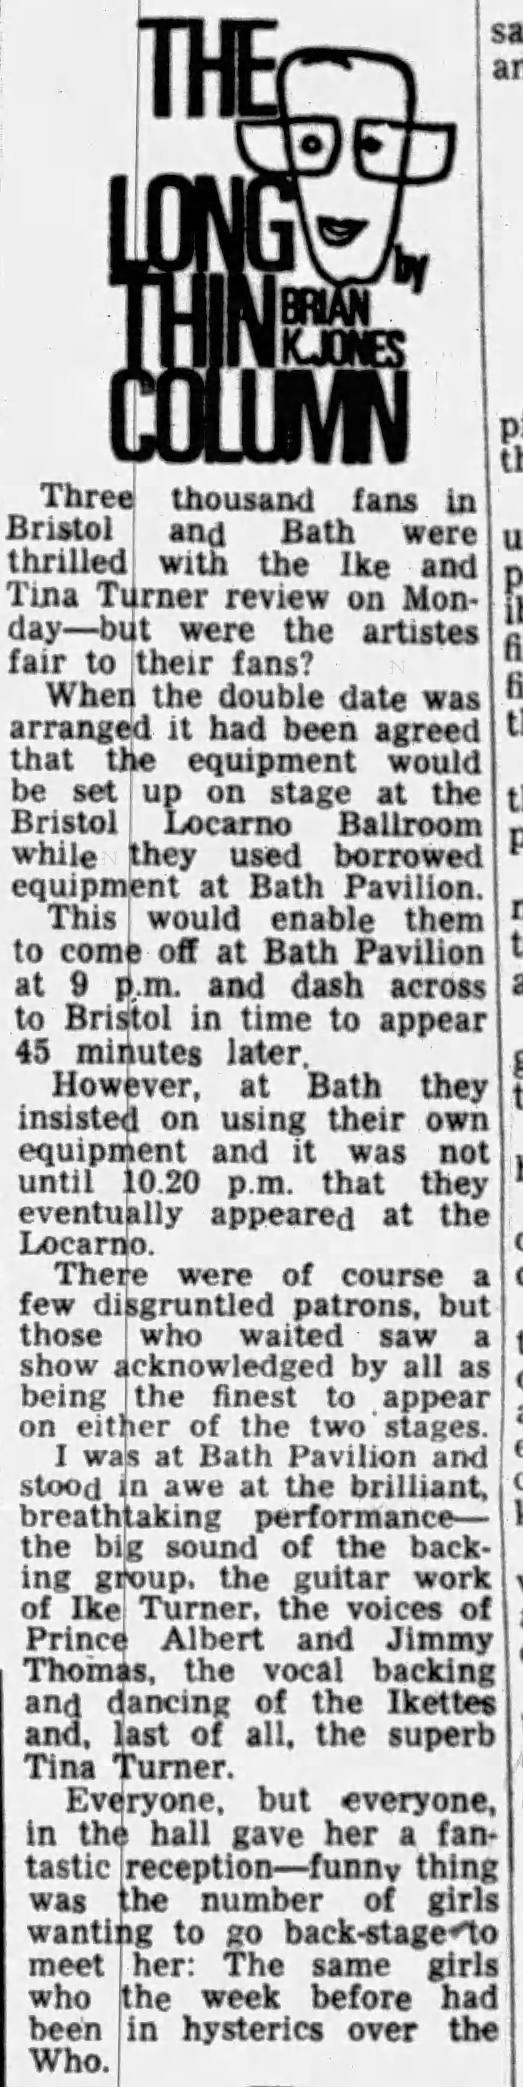 Ike & Tina Turner at Bath Pavilion / Locarno Ballroom - October 17, 1966